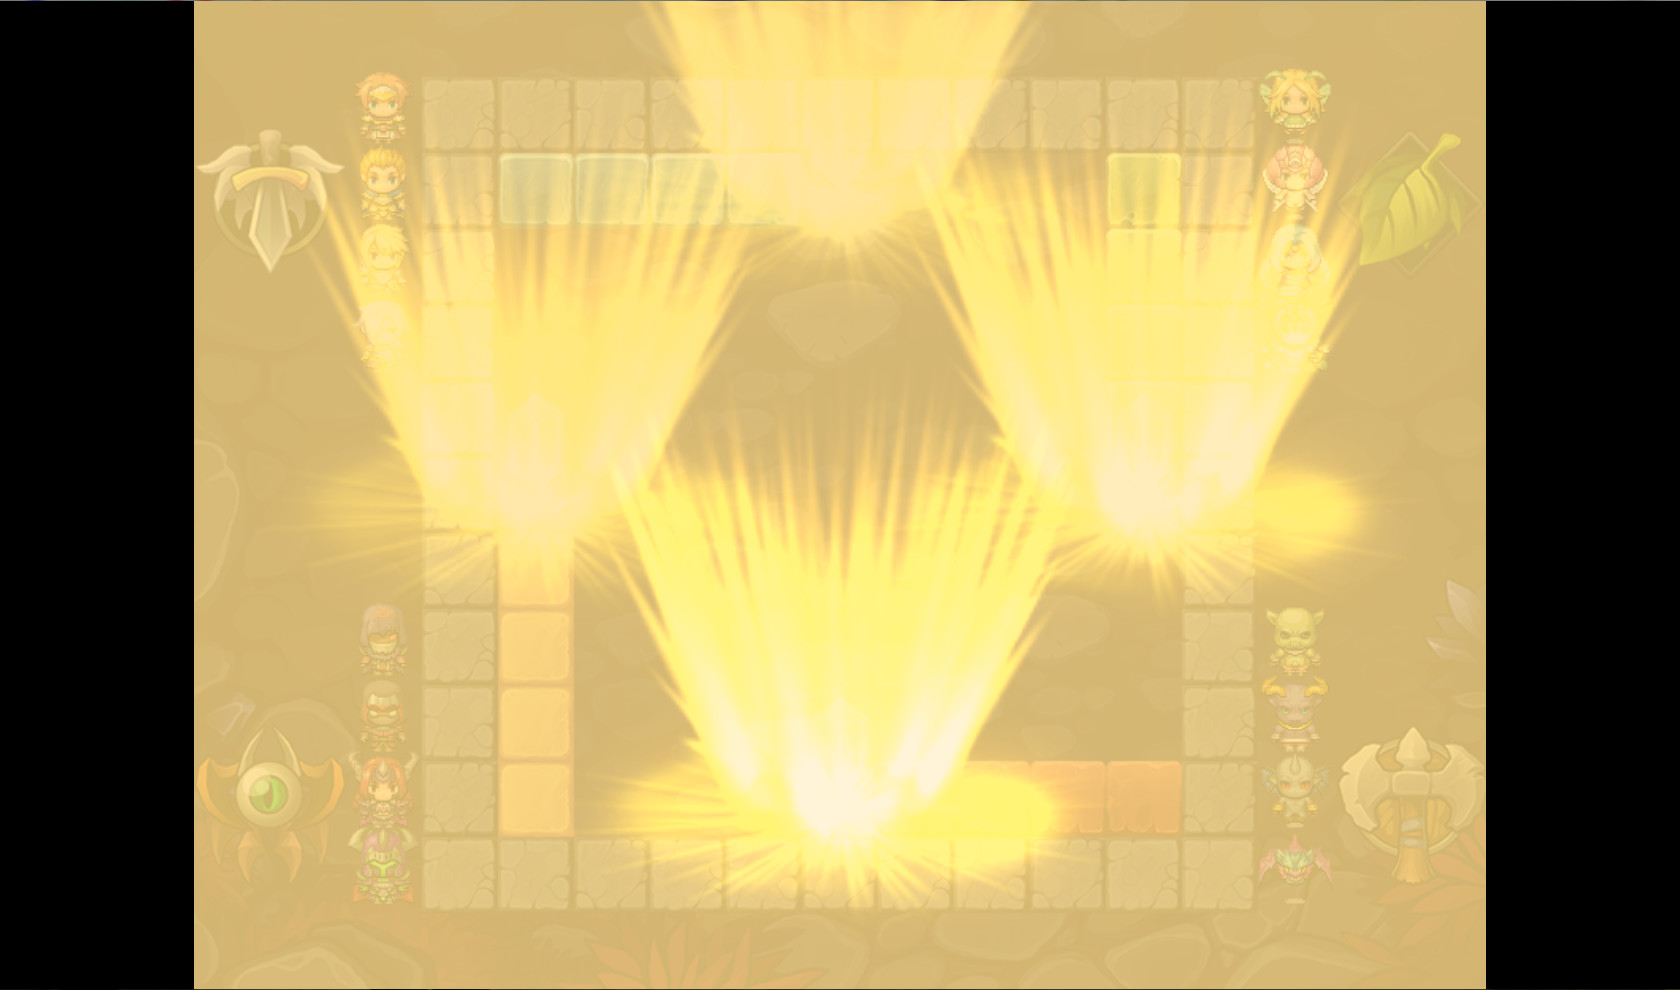 Fairyland: Power Dice screenshot